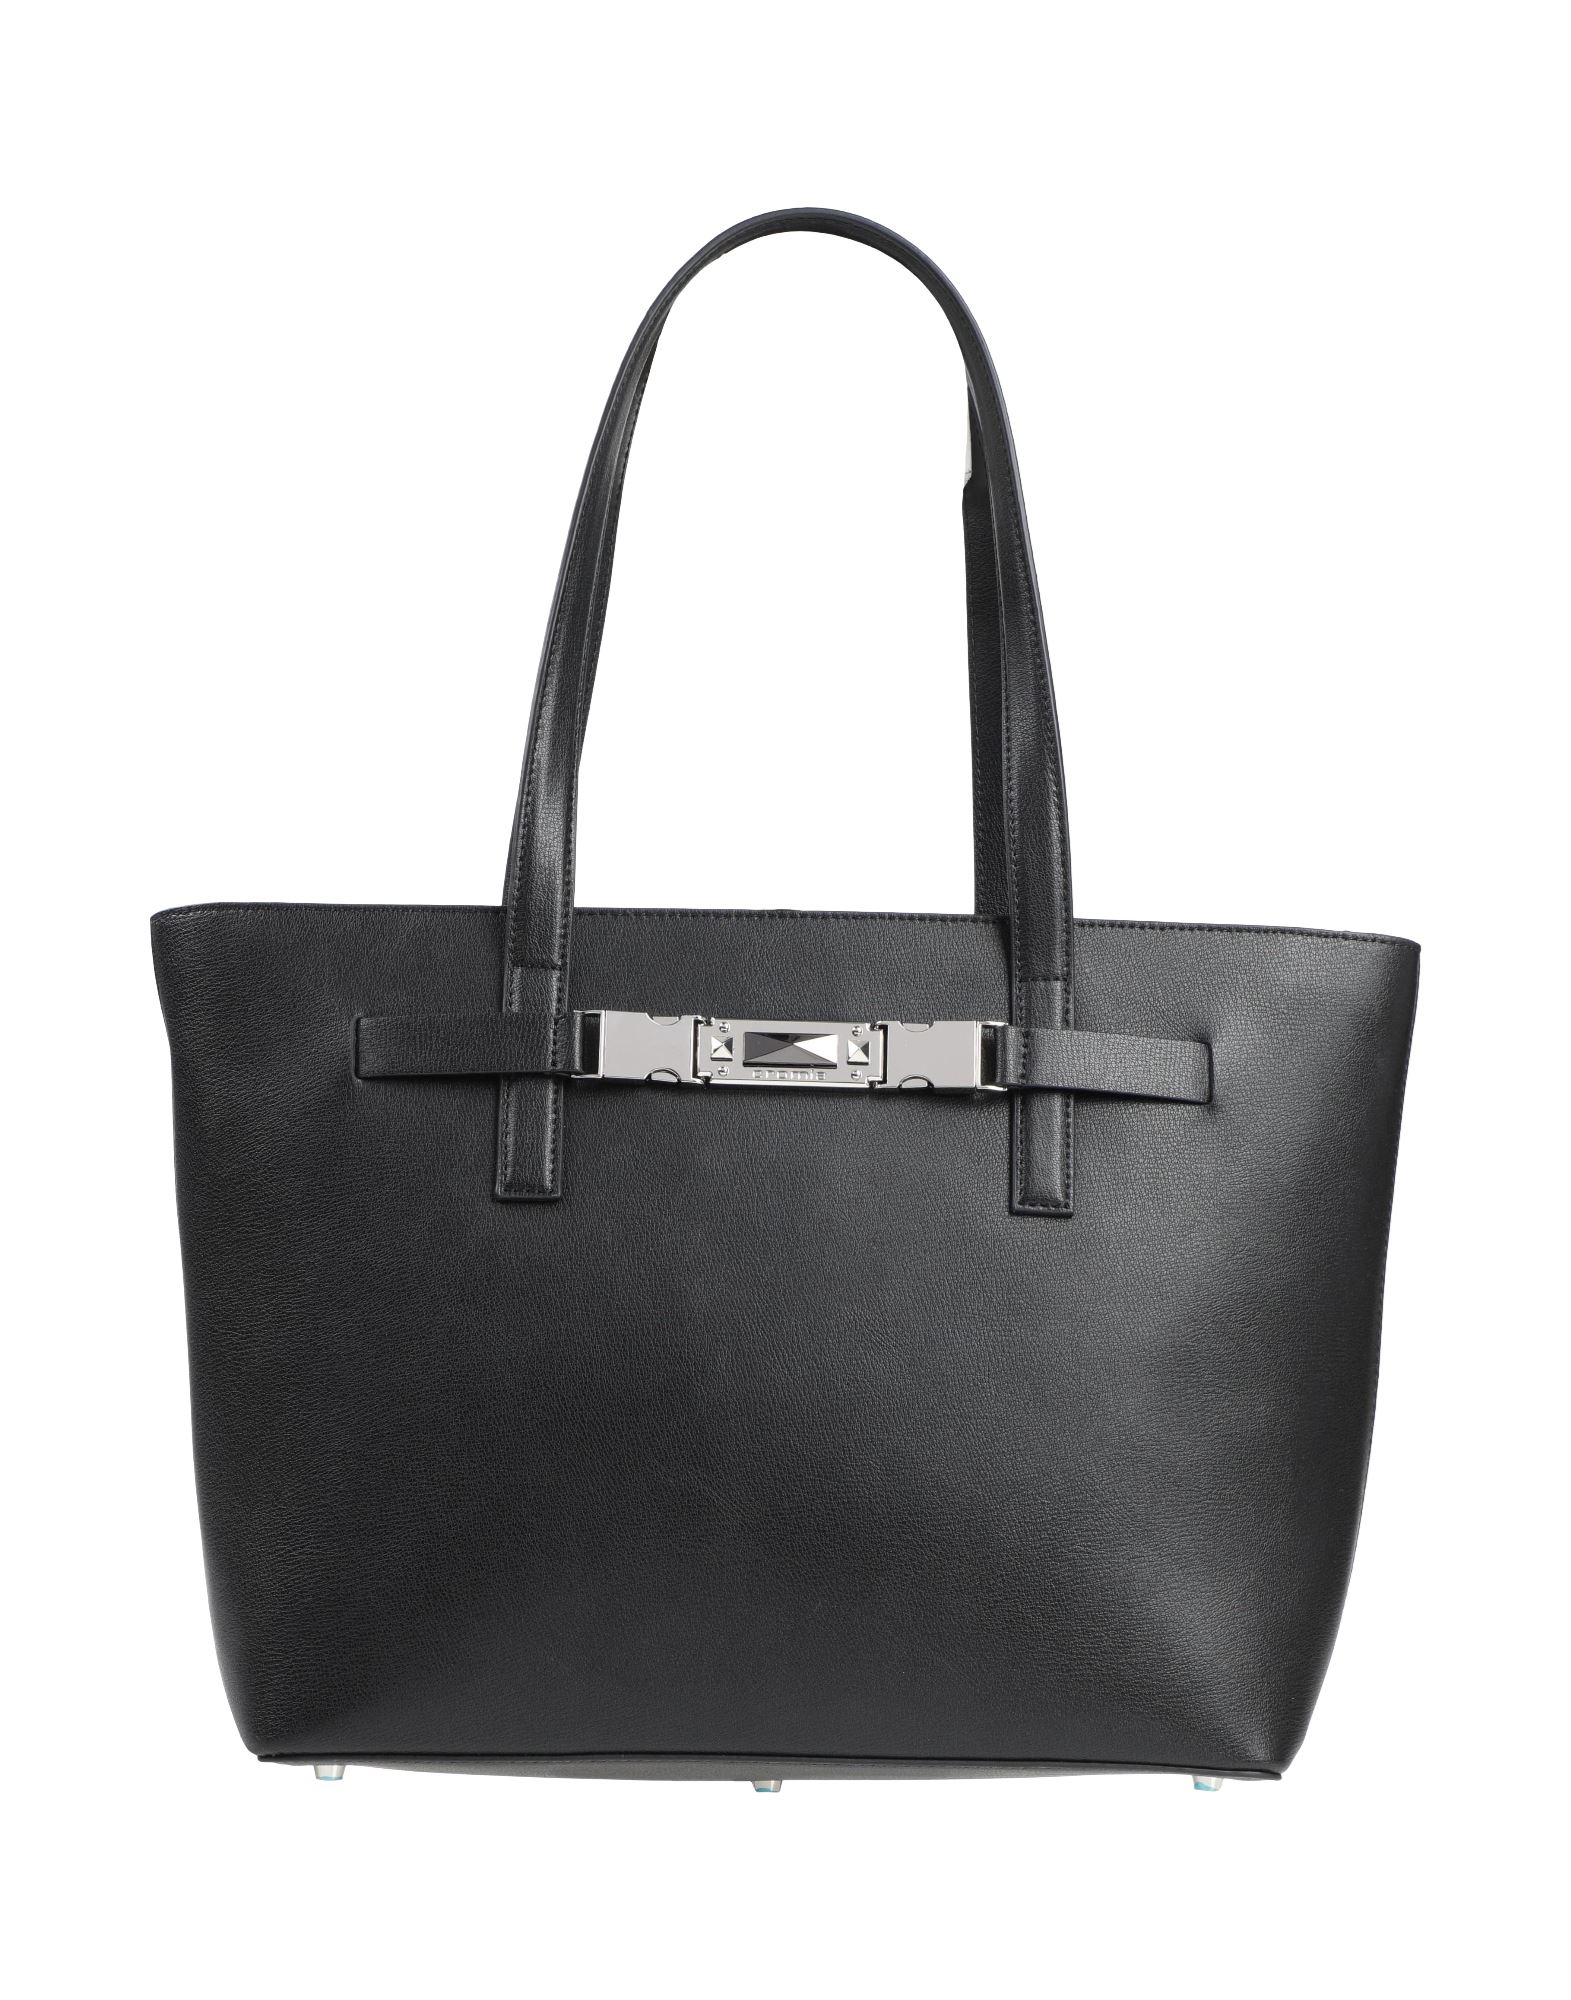 CROMIA Handbags - Item 45553241